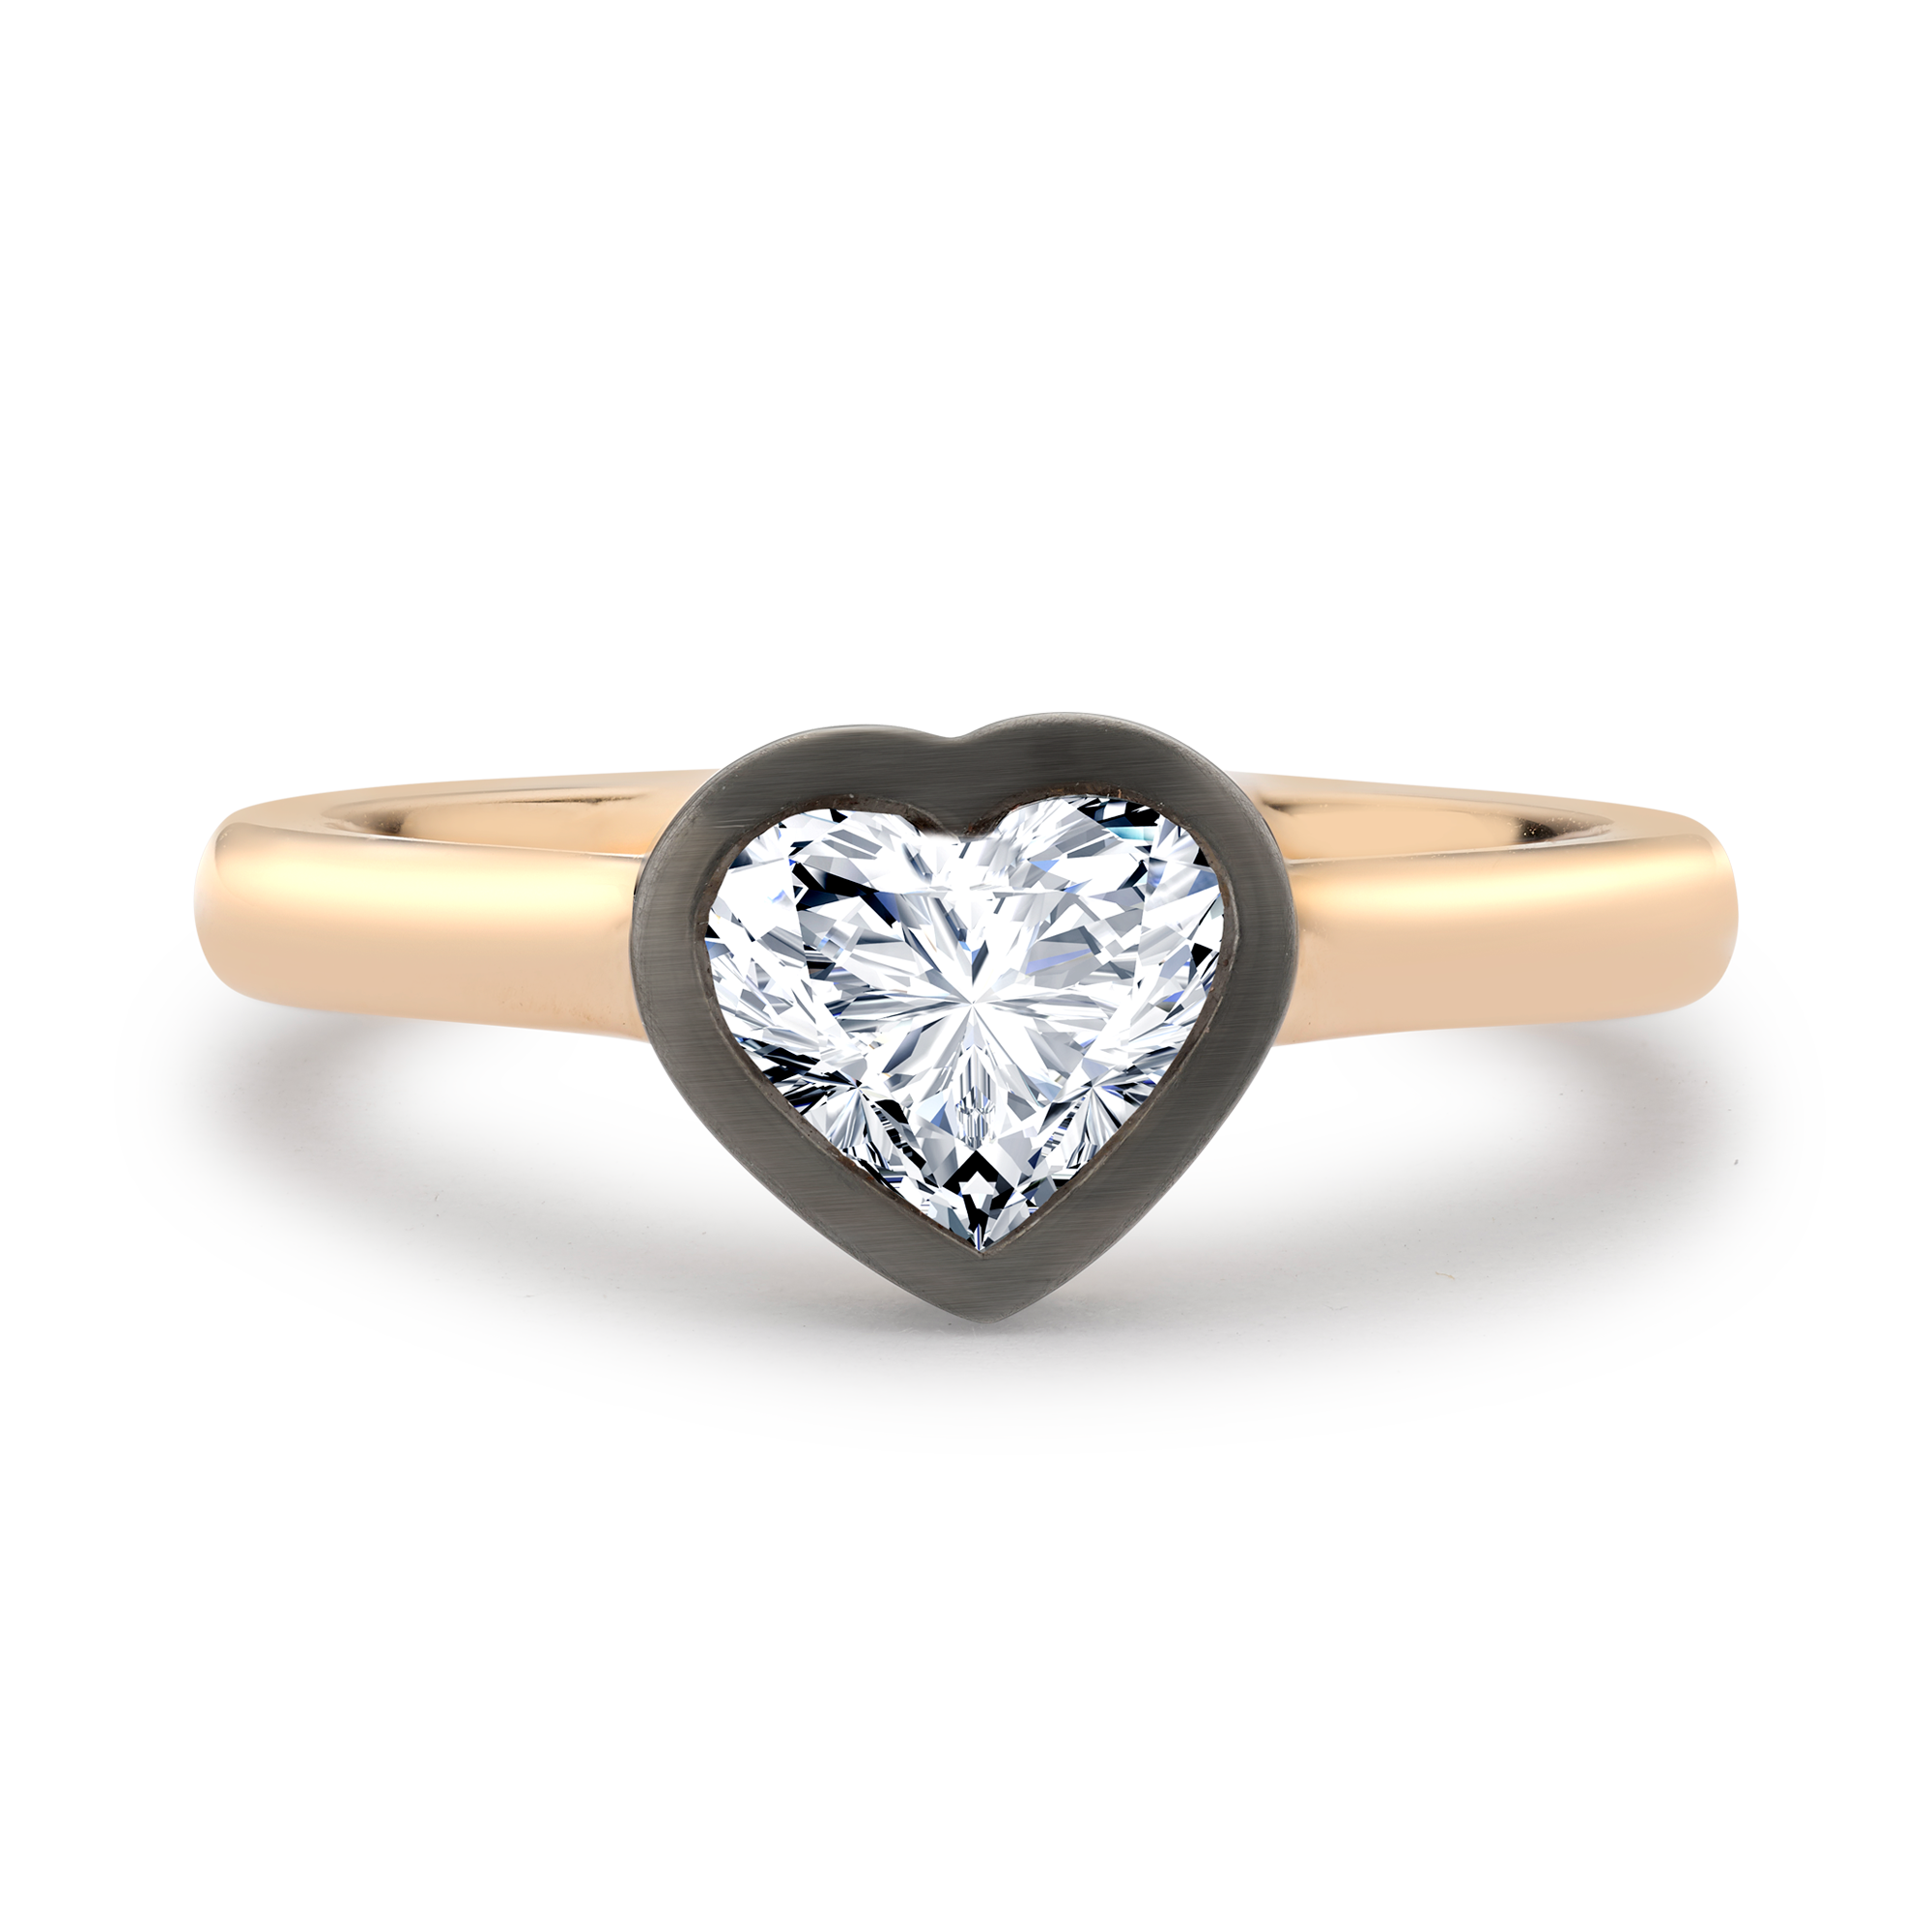 Legacy Heart Shaped Diamond Ring Heart & Brilliant Cut, Rubover Set_2